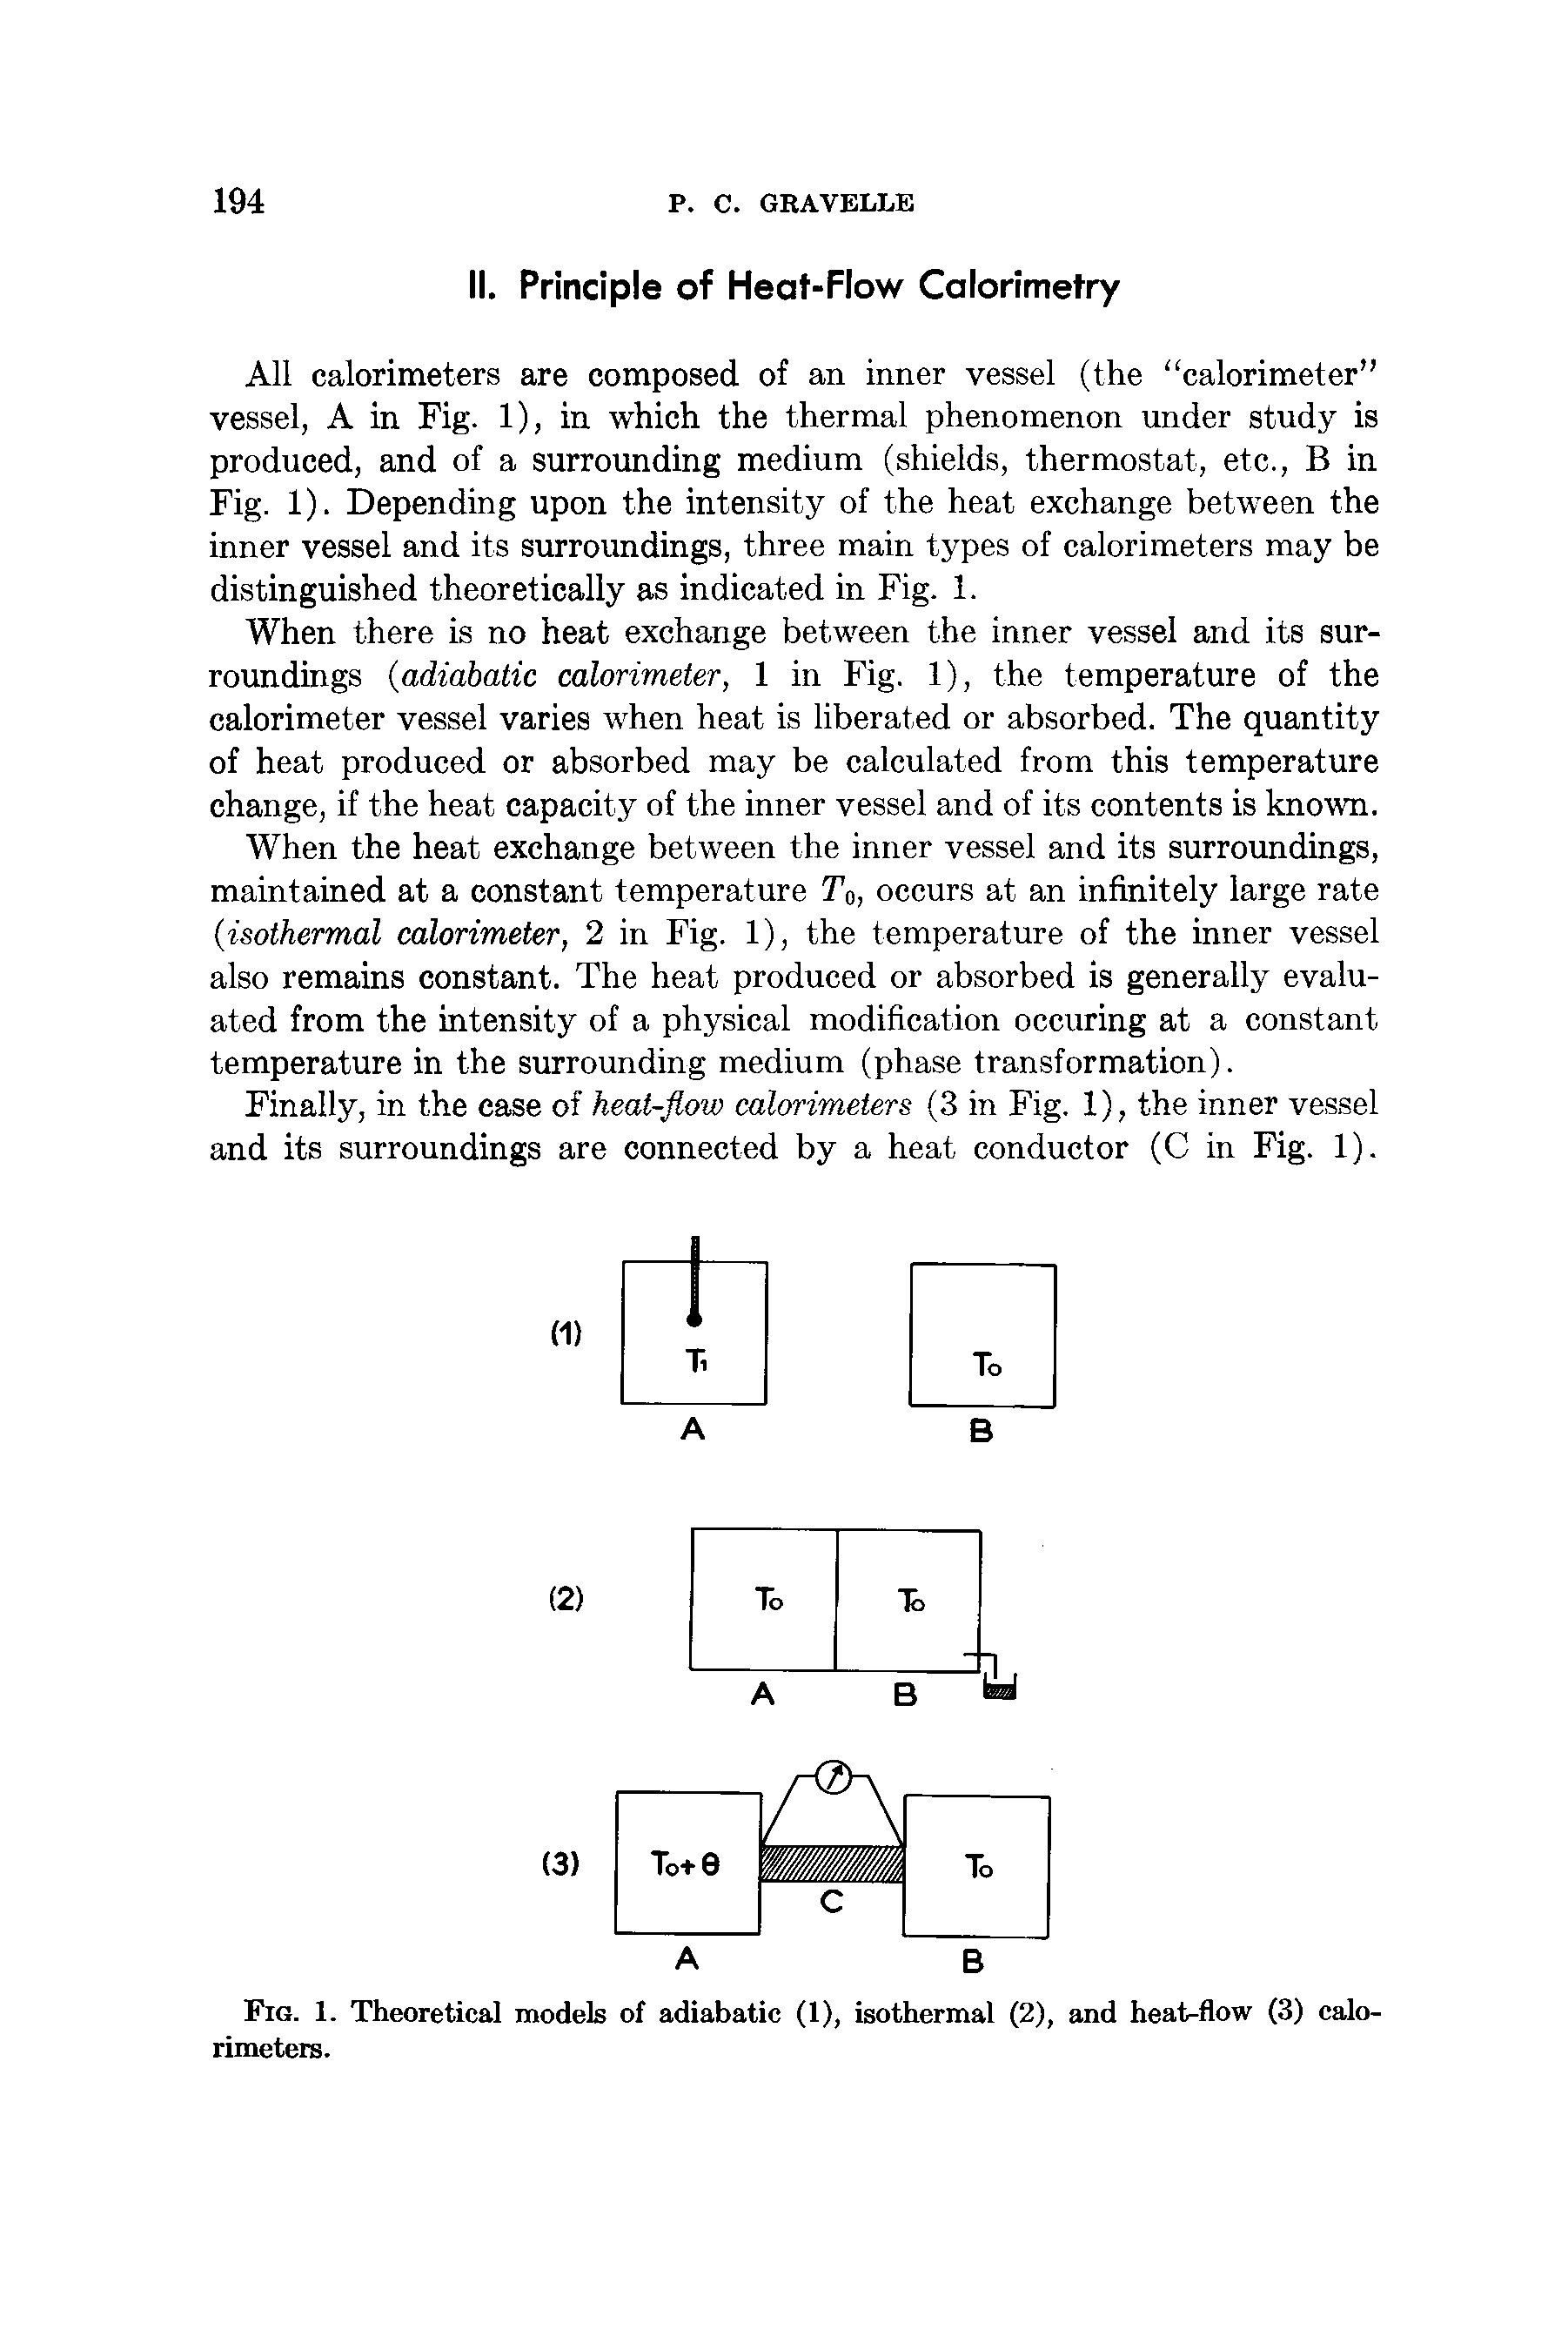 Fig. 1. Theoretical models of adiabatic (1), isothermal (2), and heat-flow (3) calorimeters.